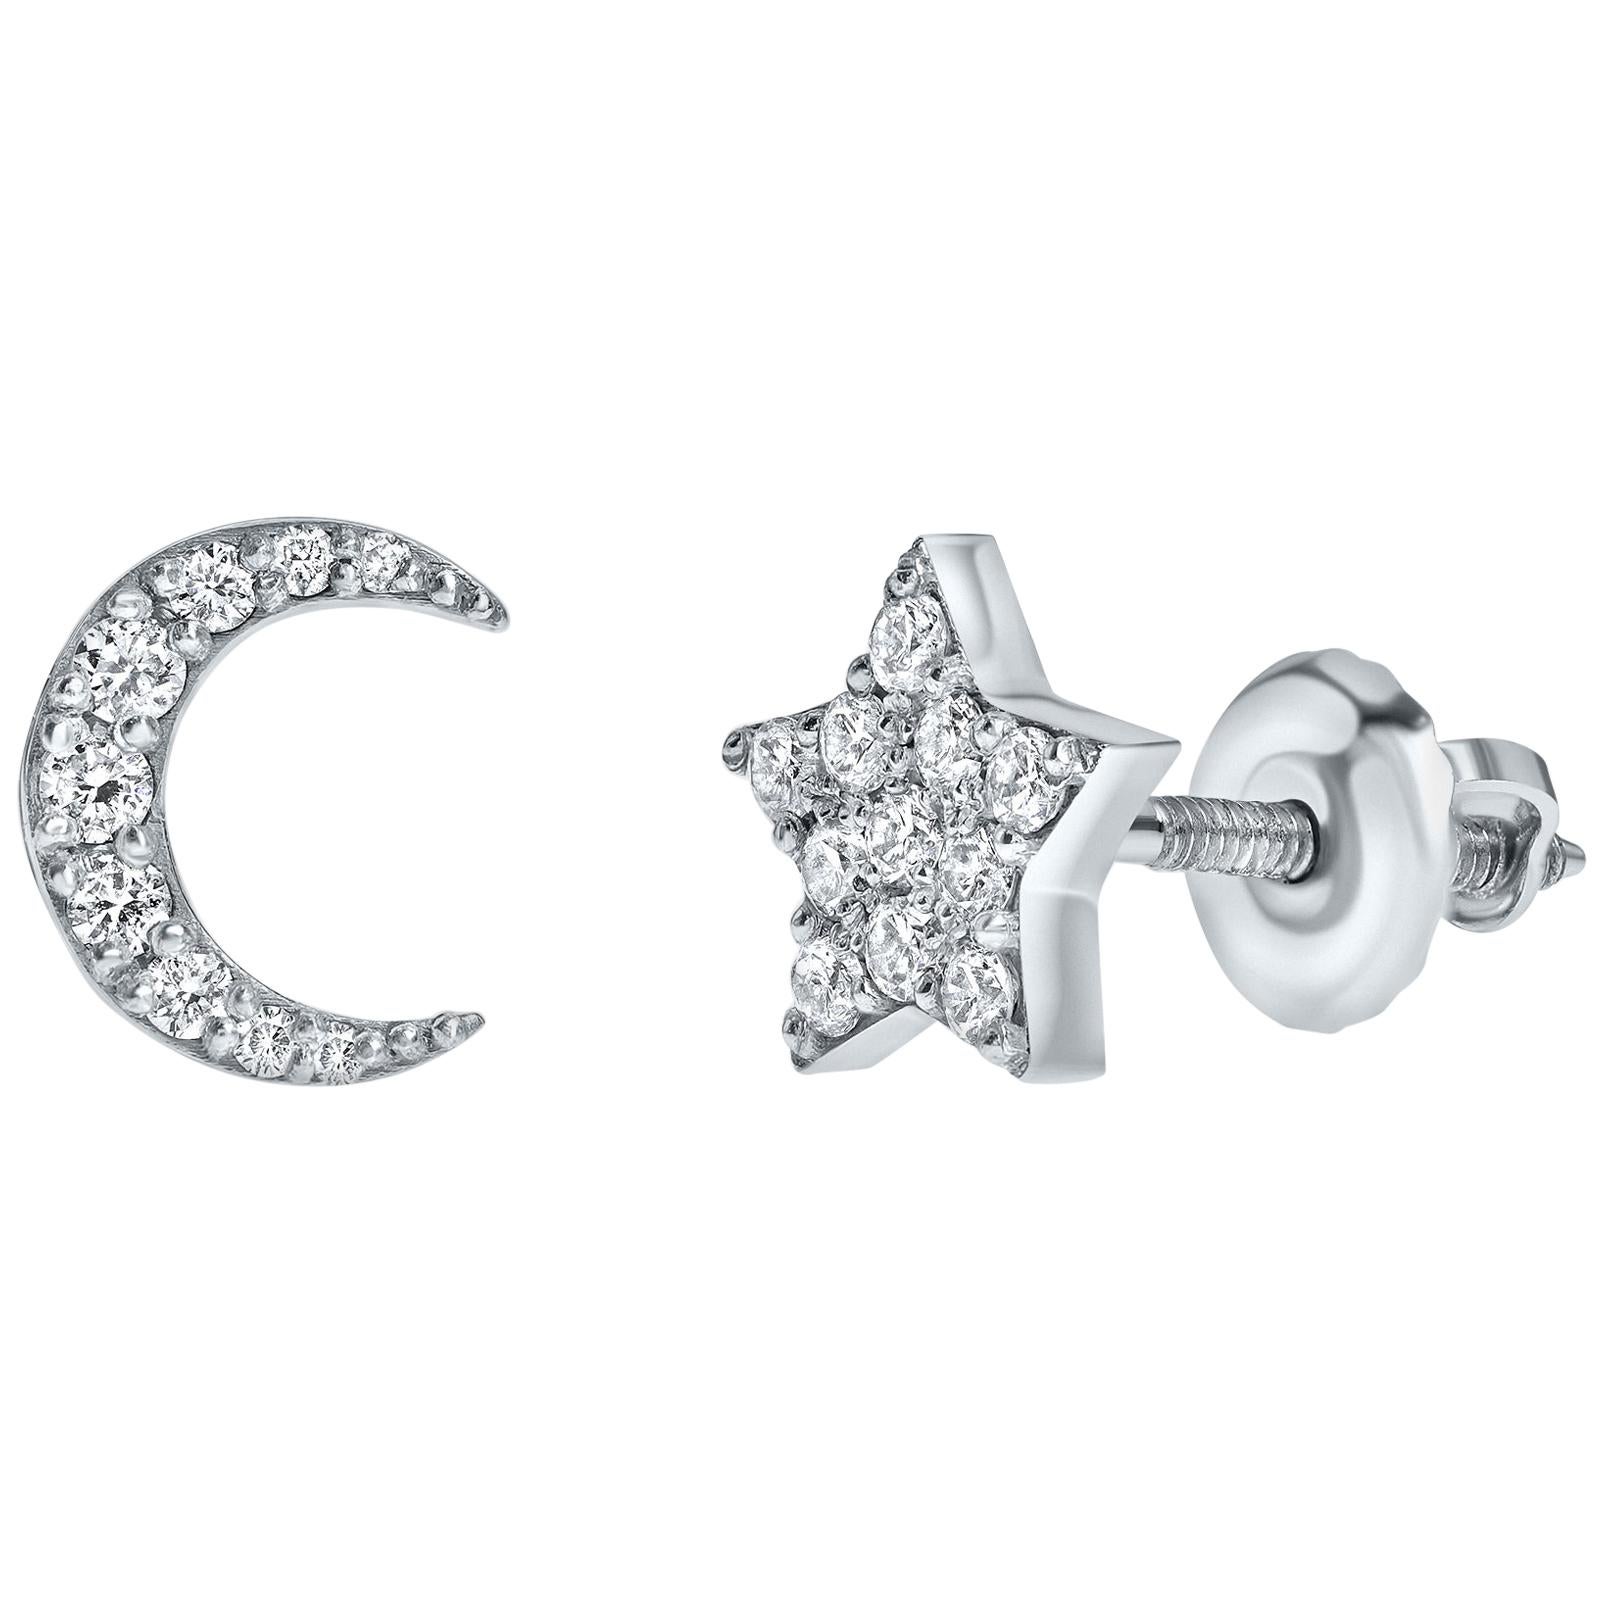 0.17 Carat Diamond Star & Moon Mismatched Stud Earrings 14K Gold - Shlomit Rogel For Sale